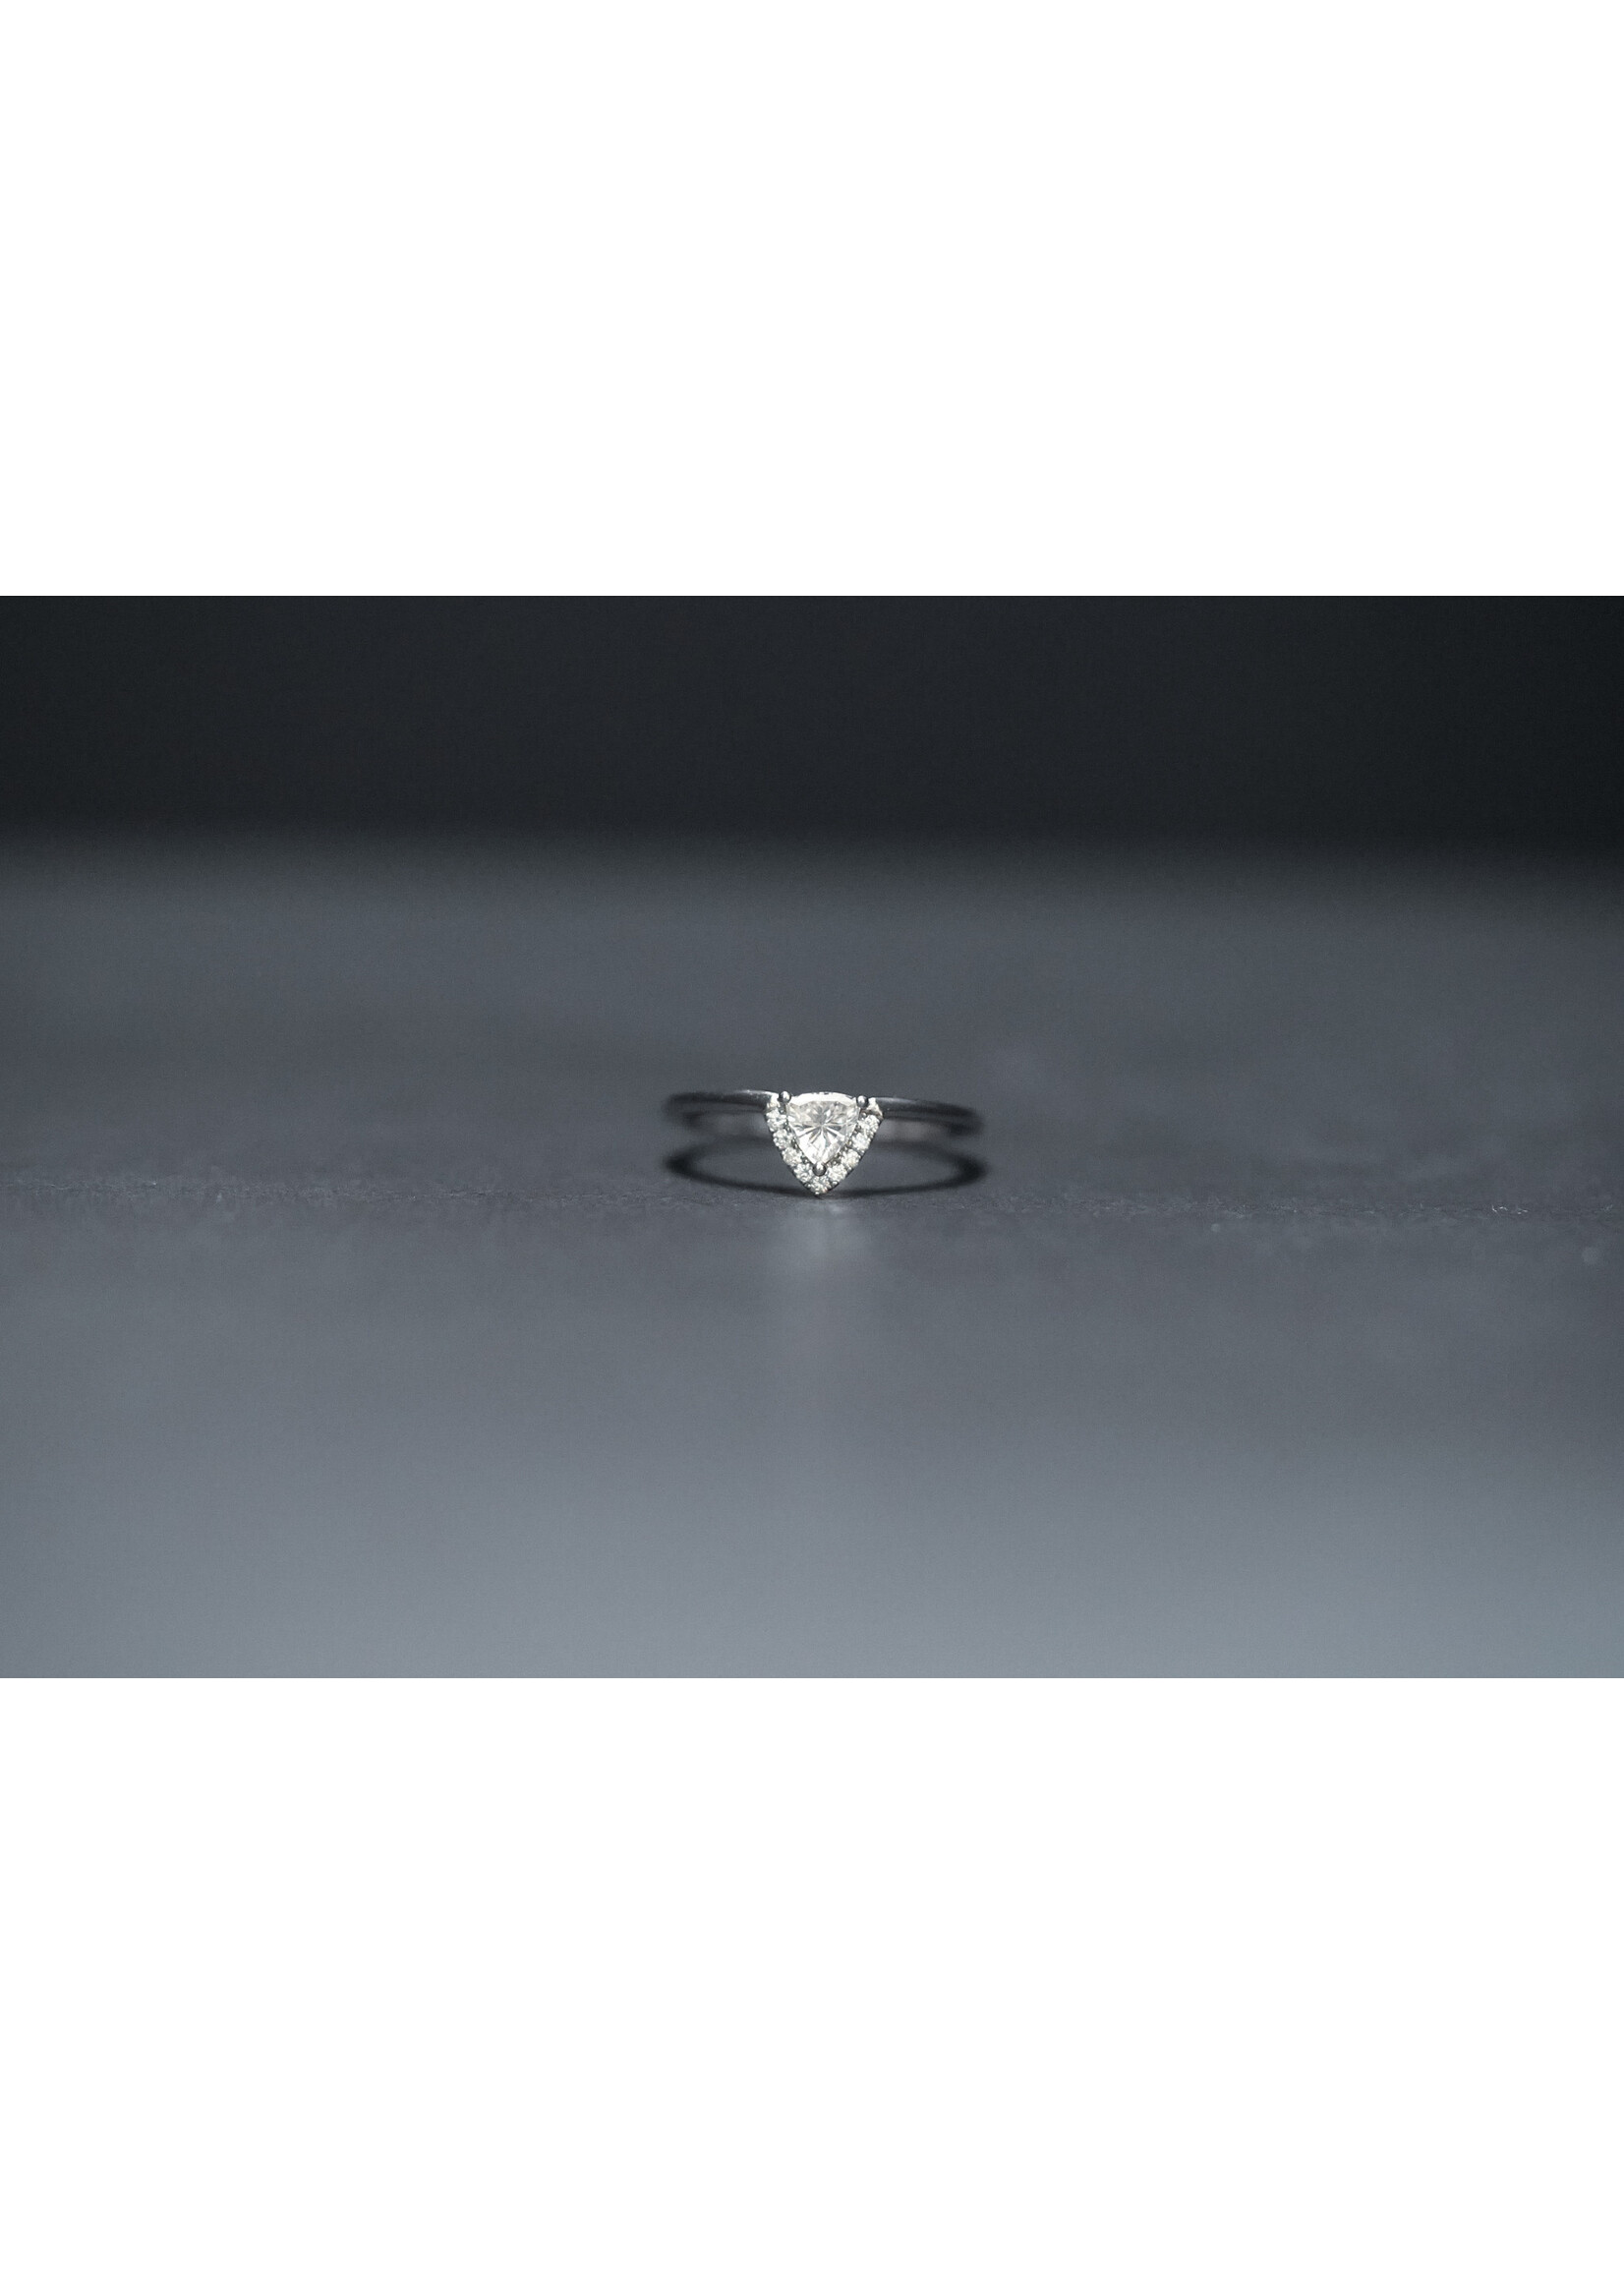 14KW 2.0g .33ctw (0.26ctr) I/SI1 Trillion Diamond Fashion Ring (size 6.75)